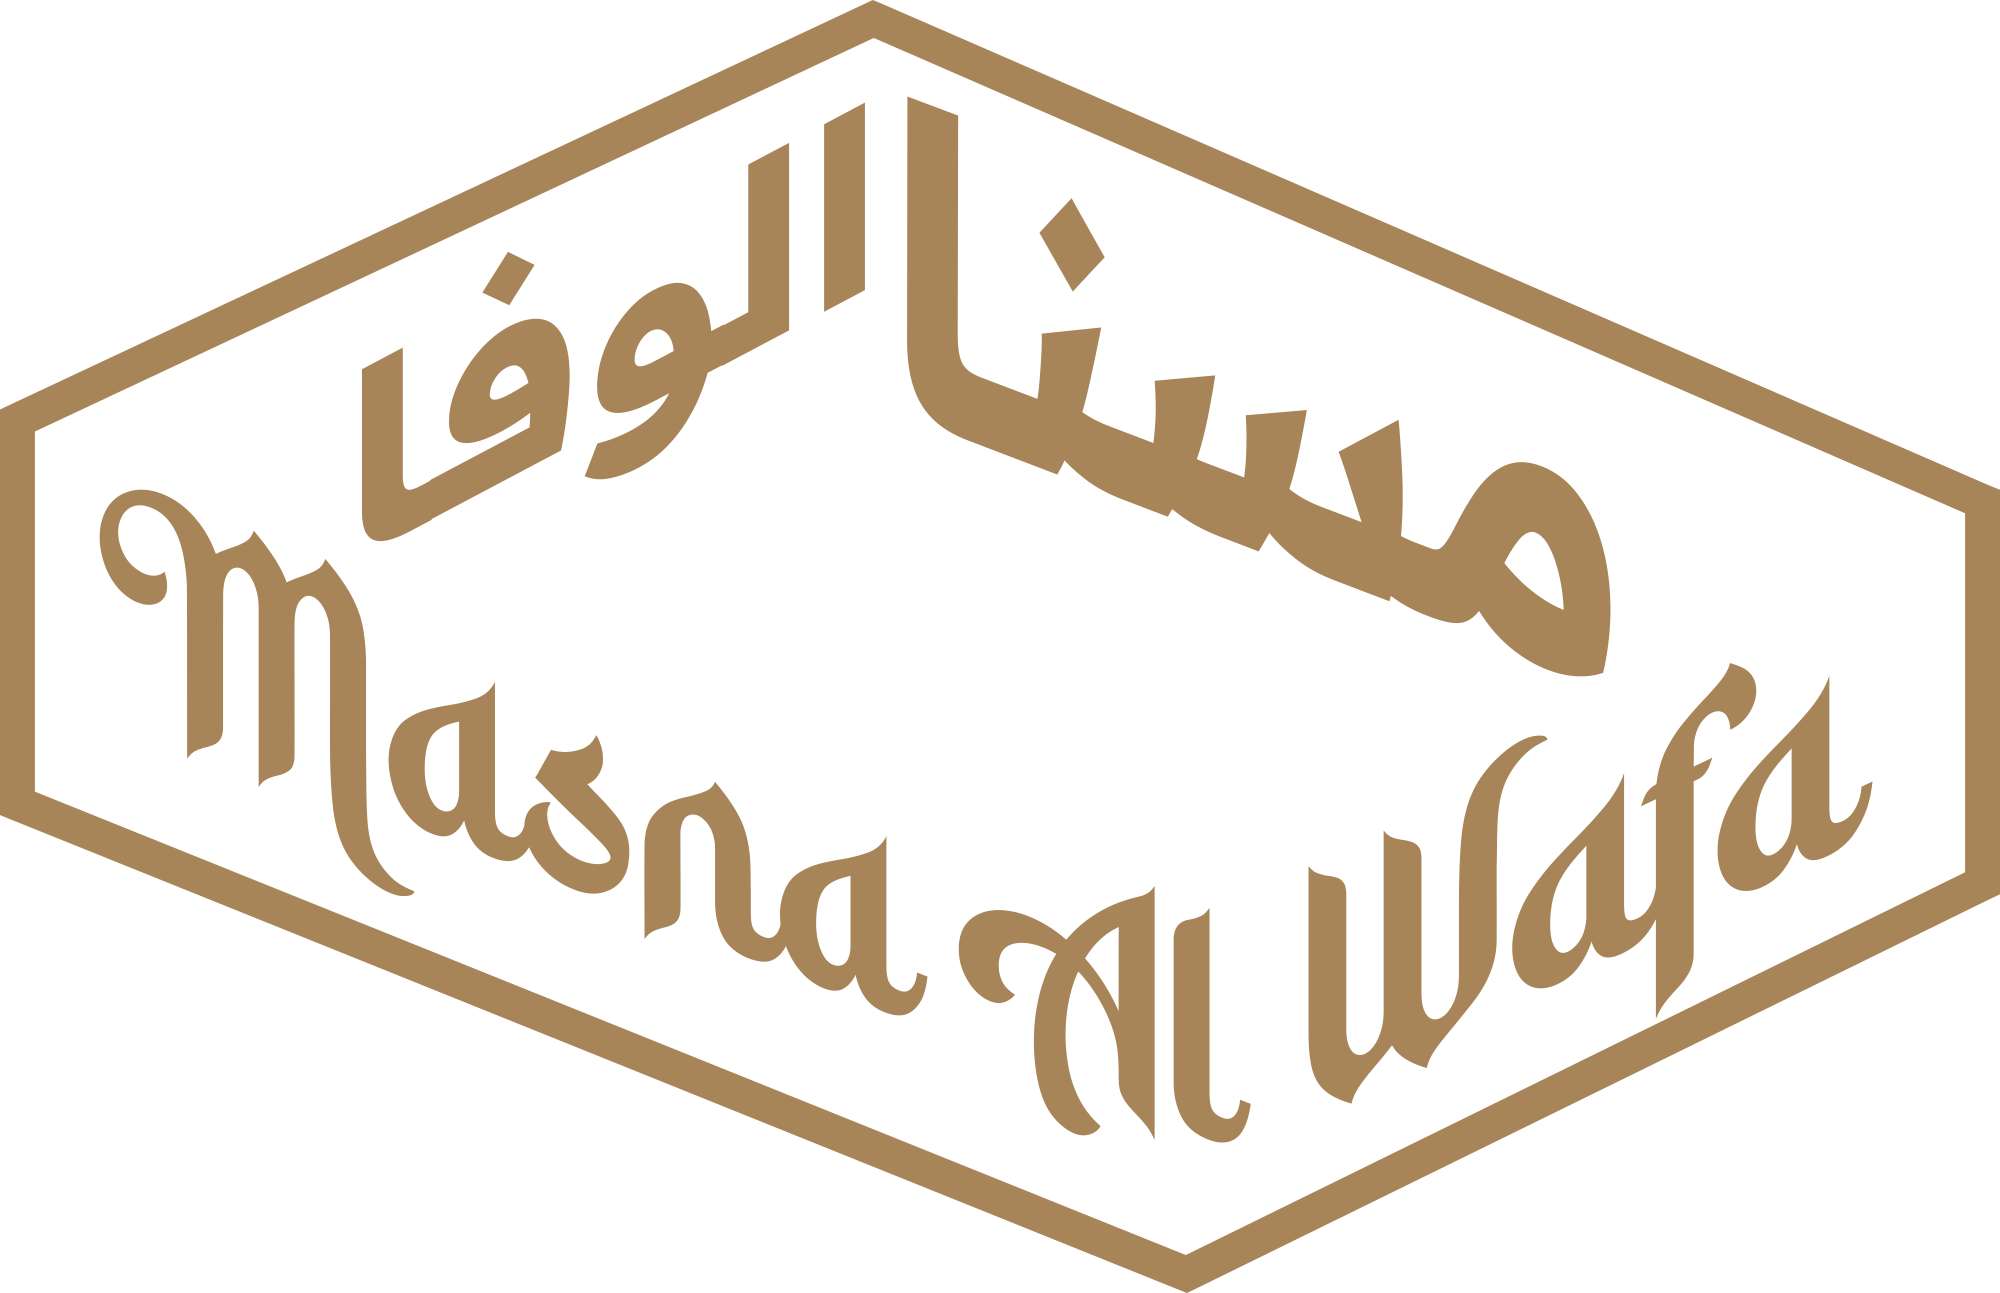 Masna Al Wafa logo gold